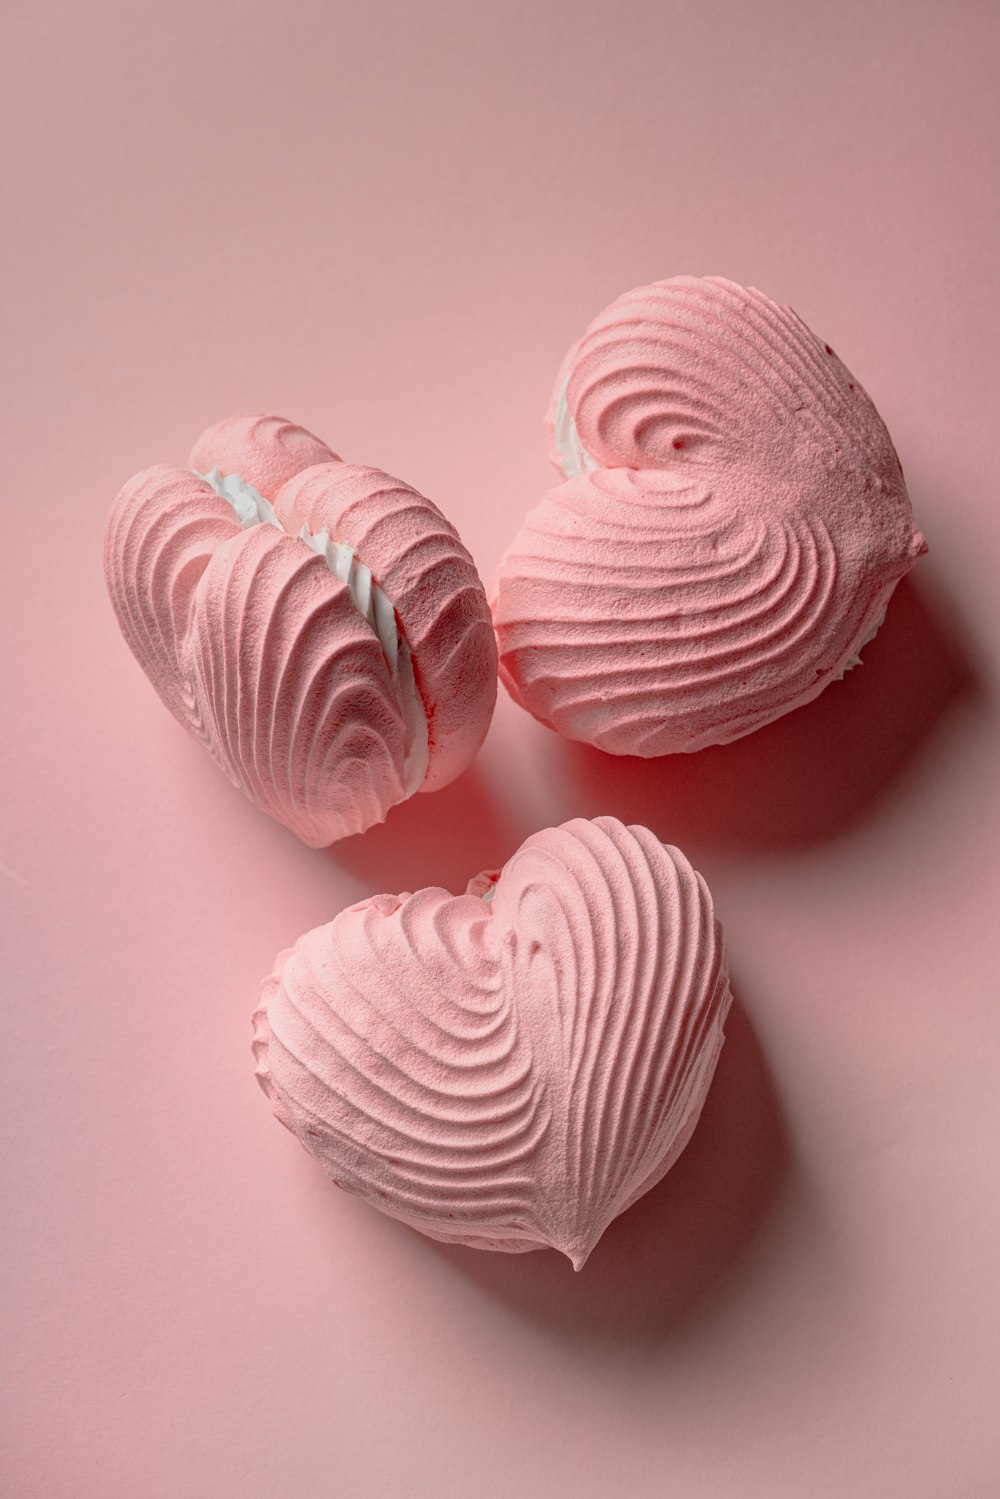 heart-shaped macaroons